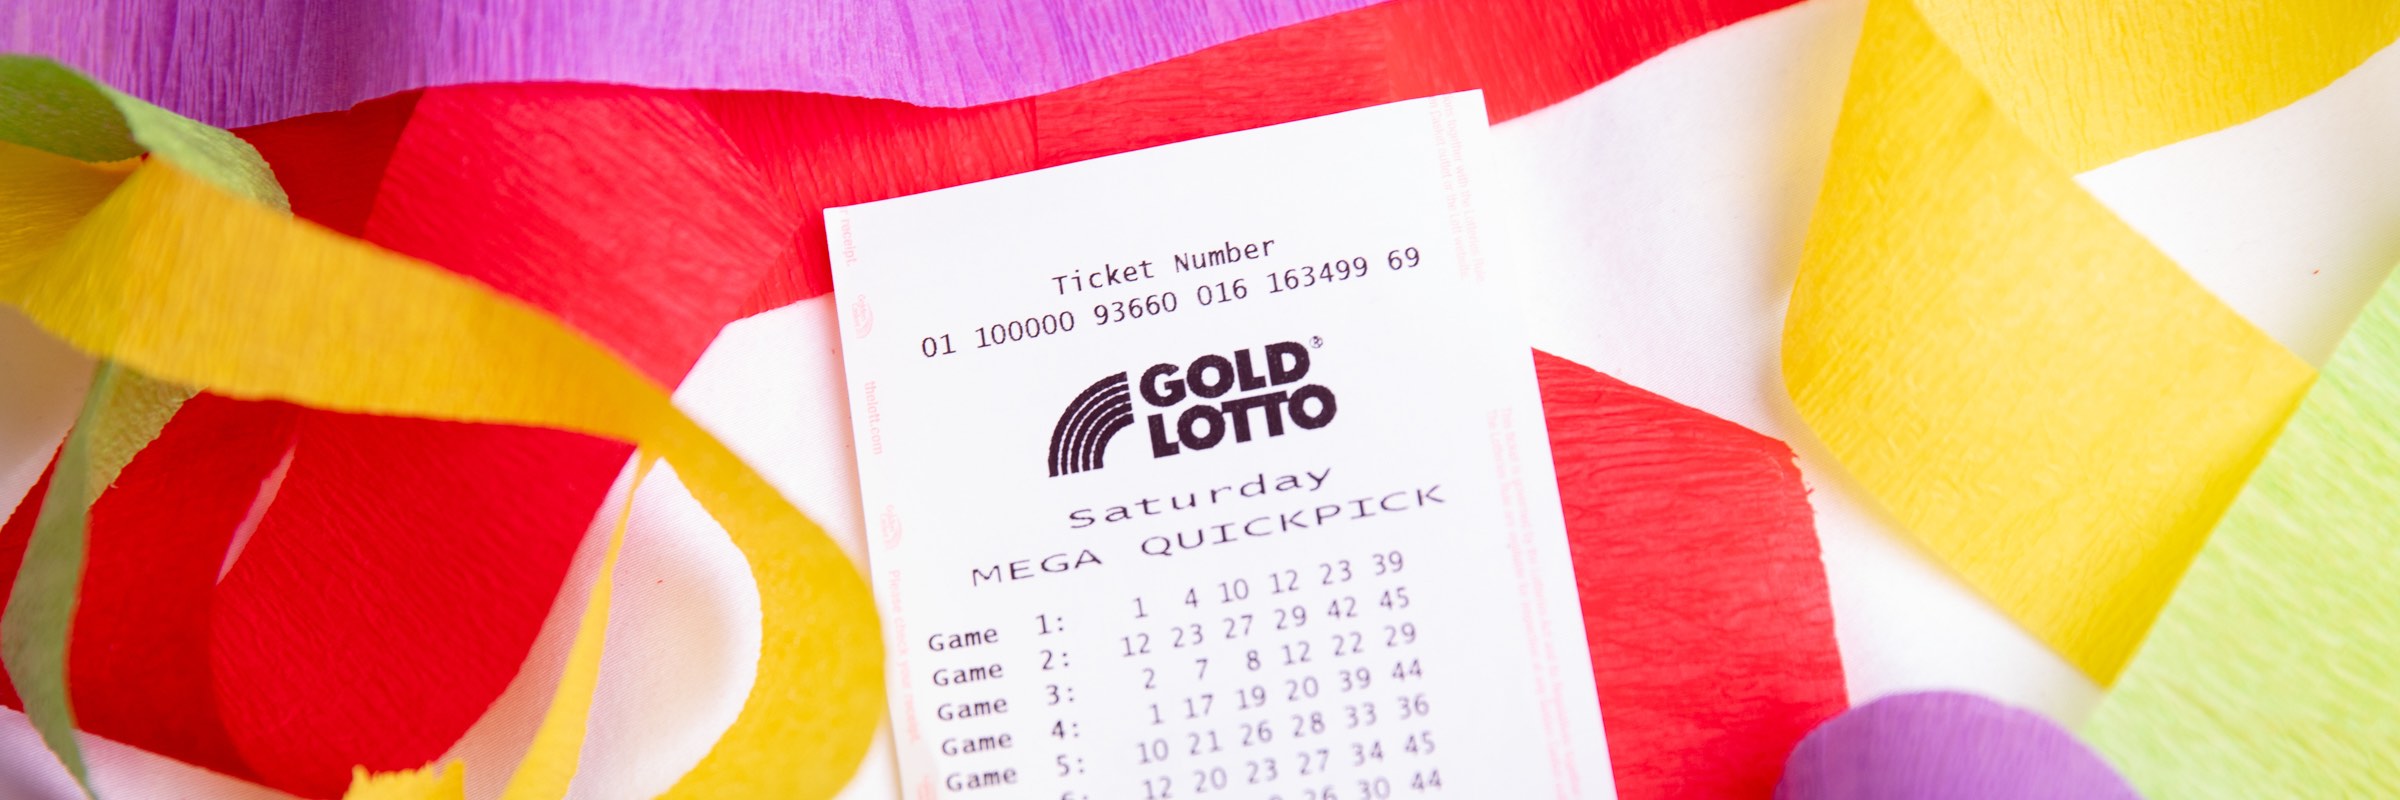 Saturday Gold Lotto Divisions